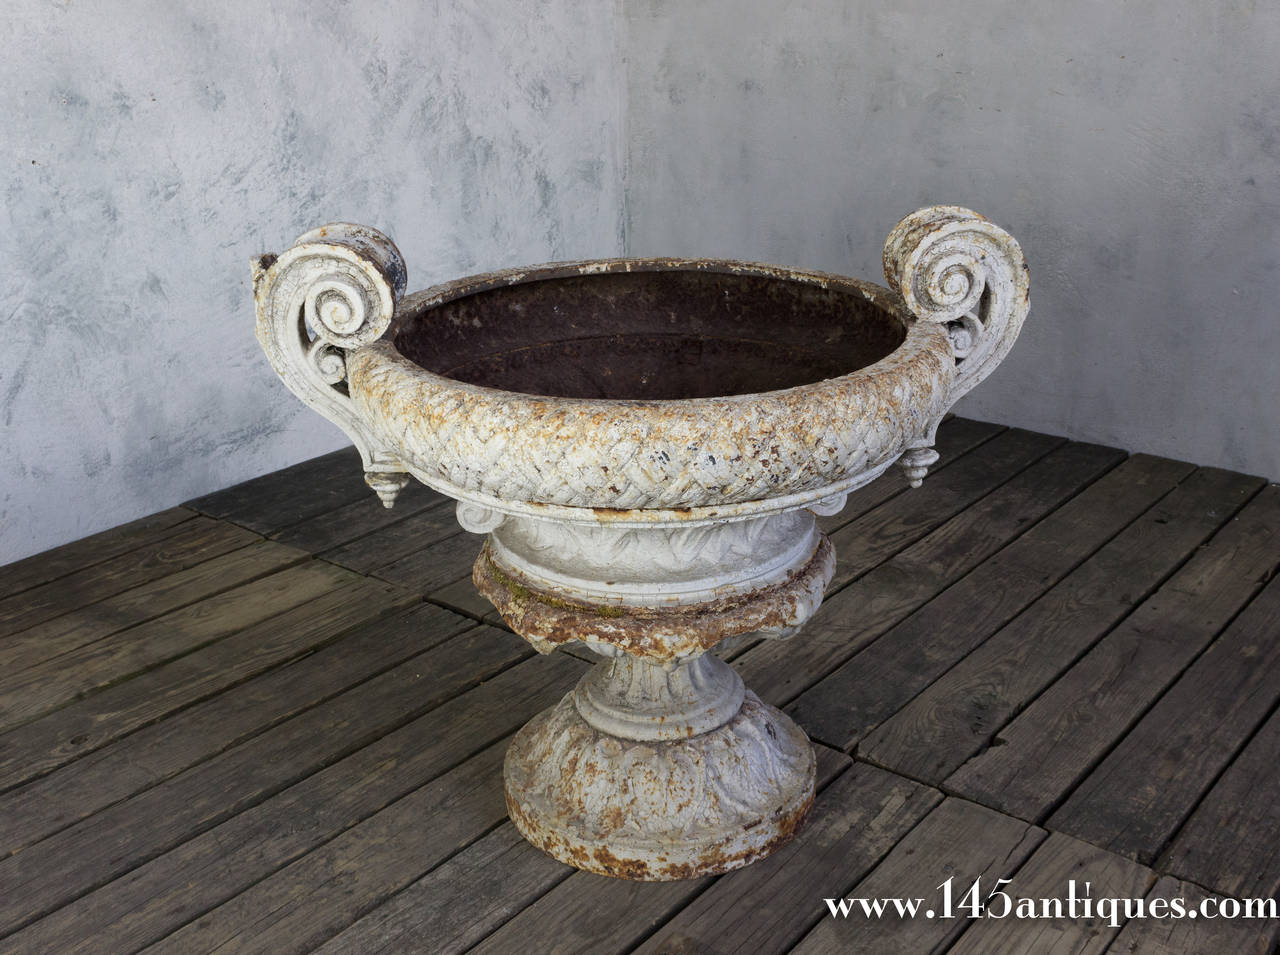 Magnificent 19th C. garden urn with original patina